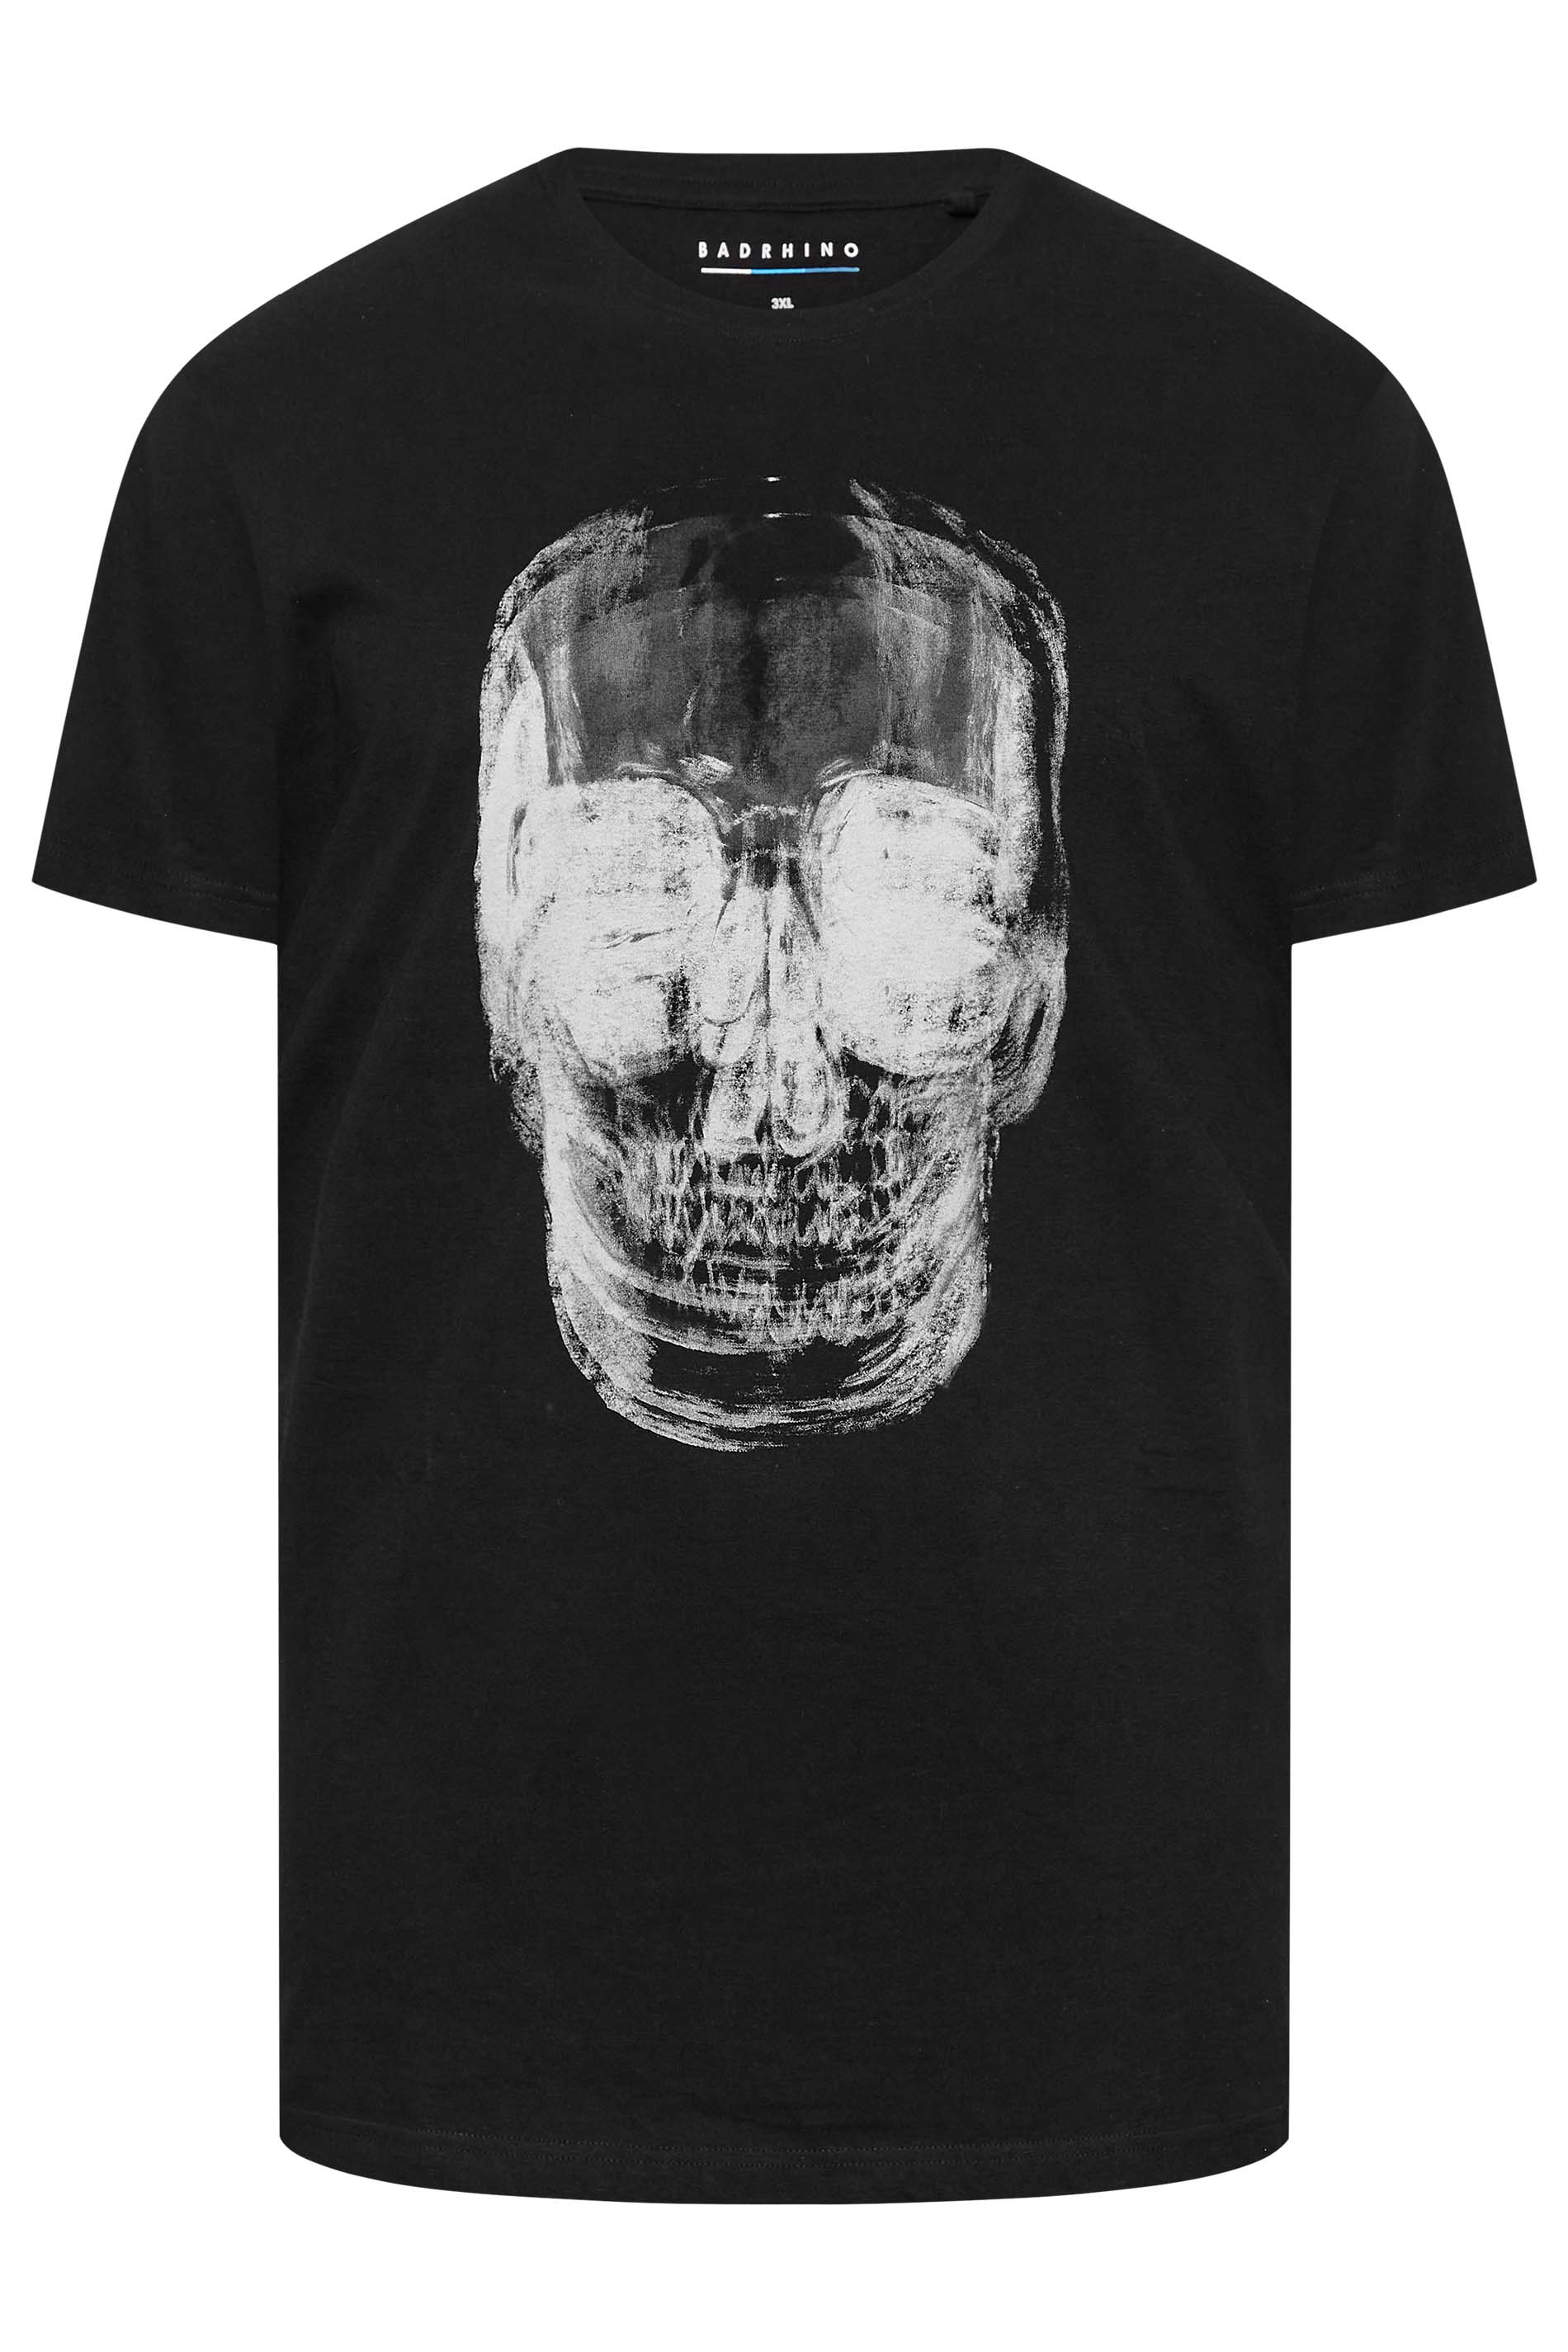 BadRhino Big & Tall Black X-Ray Skull Print T-Shirt | BadRhino  2